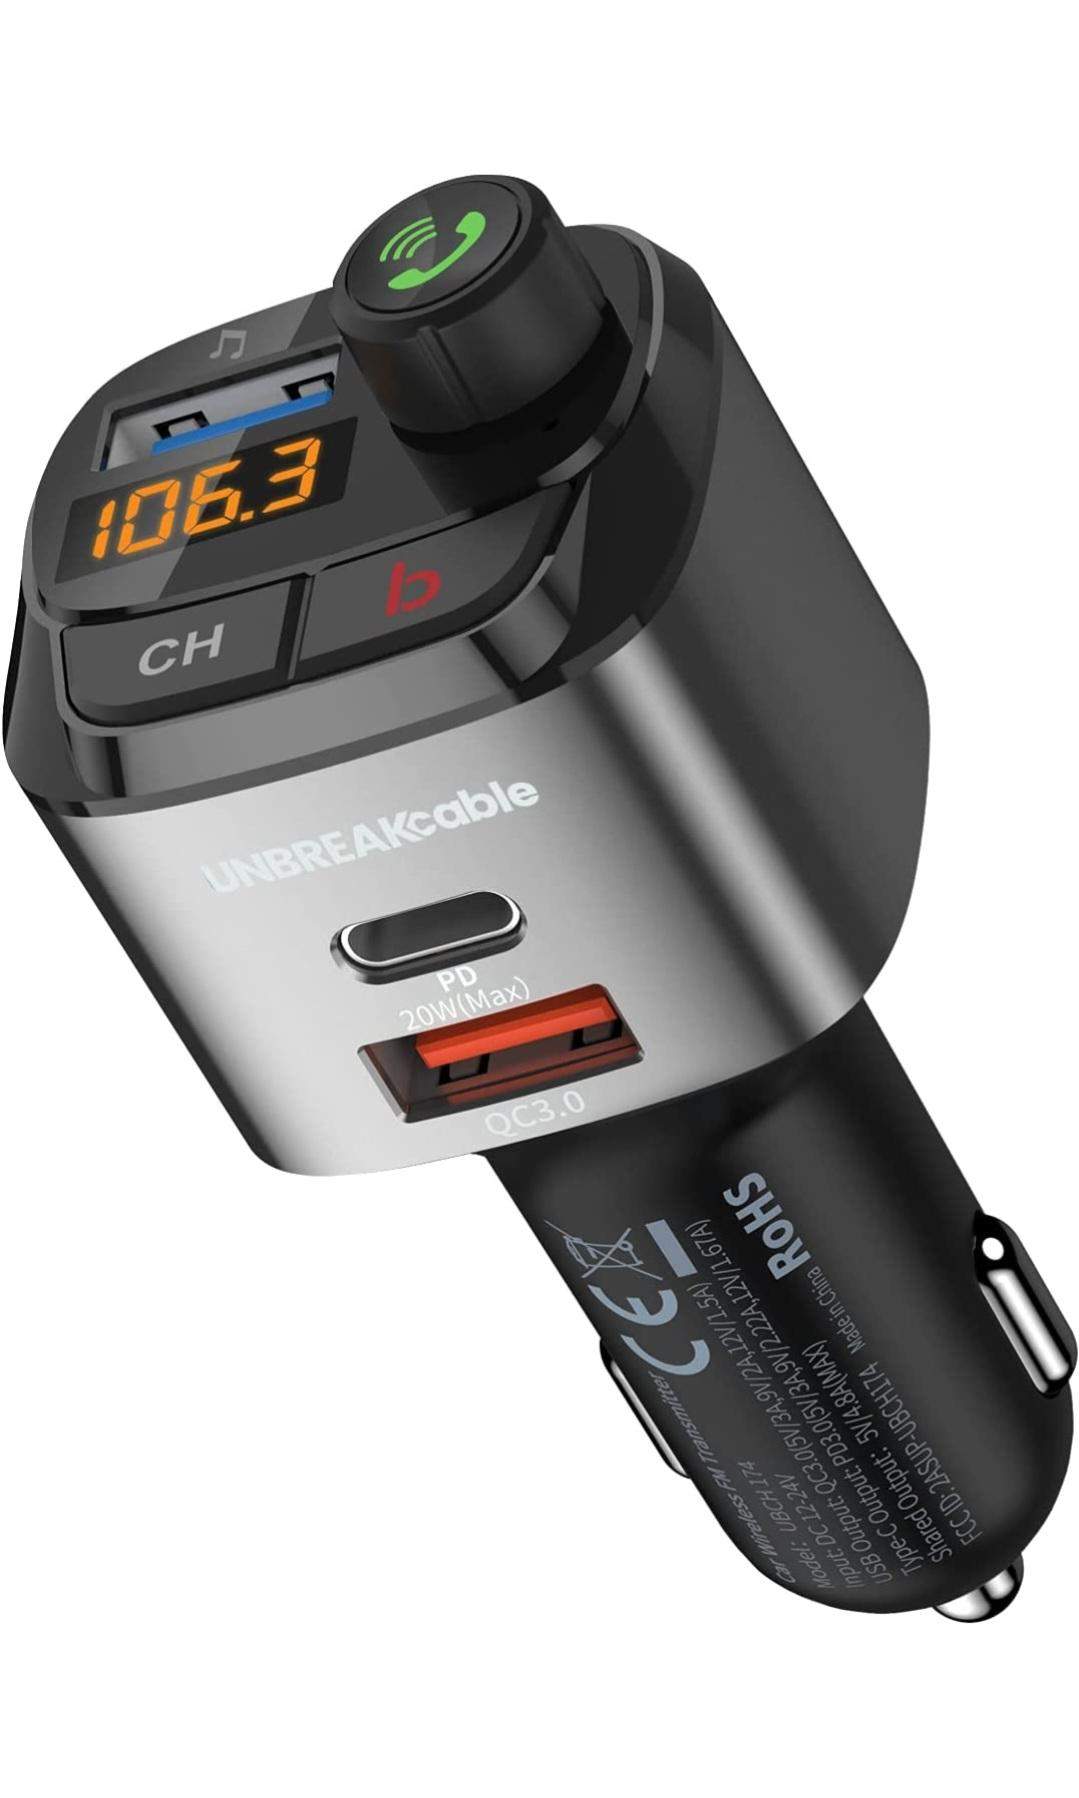 Auto Bluetooth MP3 Player Ladegerät FM Transmitter Freisprechfunk